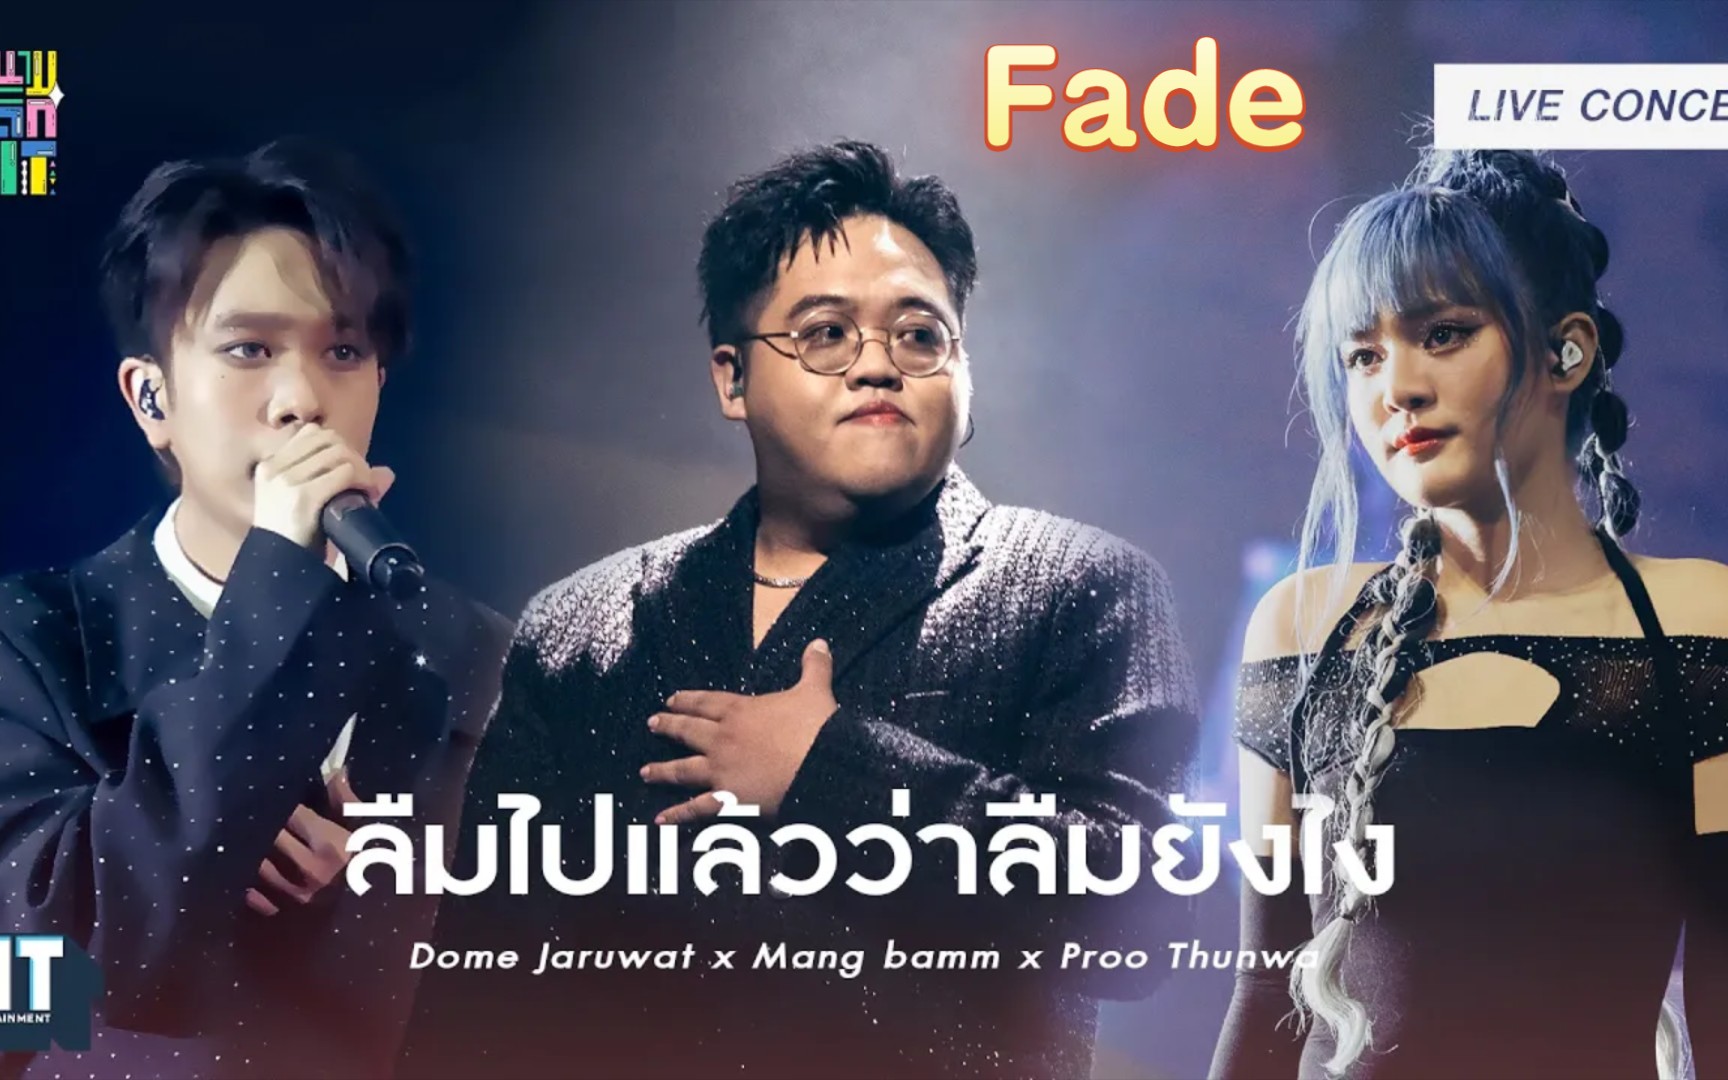 【Dome Jaruwat+Mang bamm+Proo Thunwa】 Fade |中泰双语|翻唱live|原唱:Jeff Satur